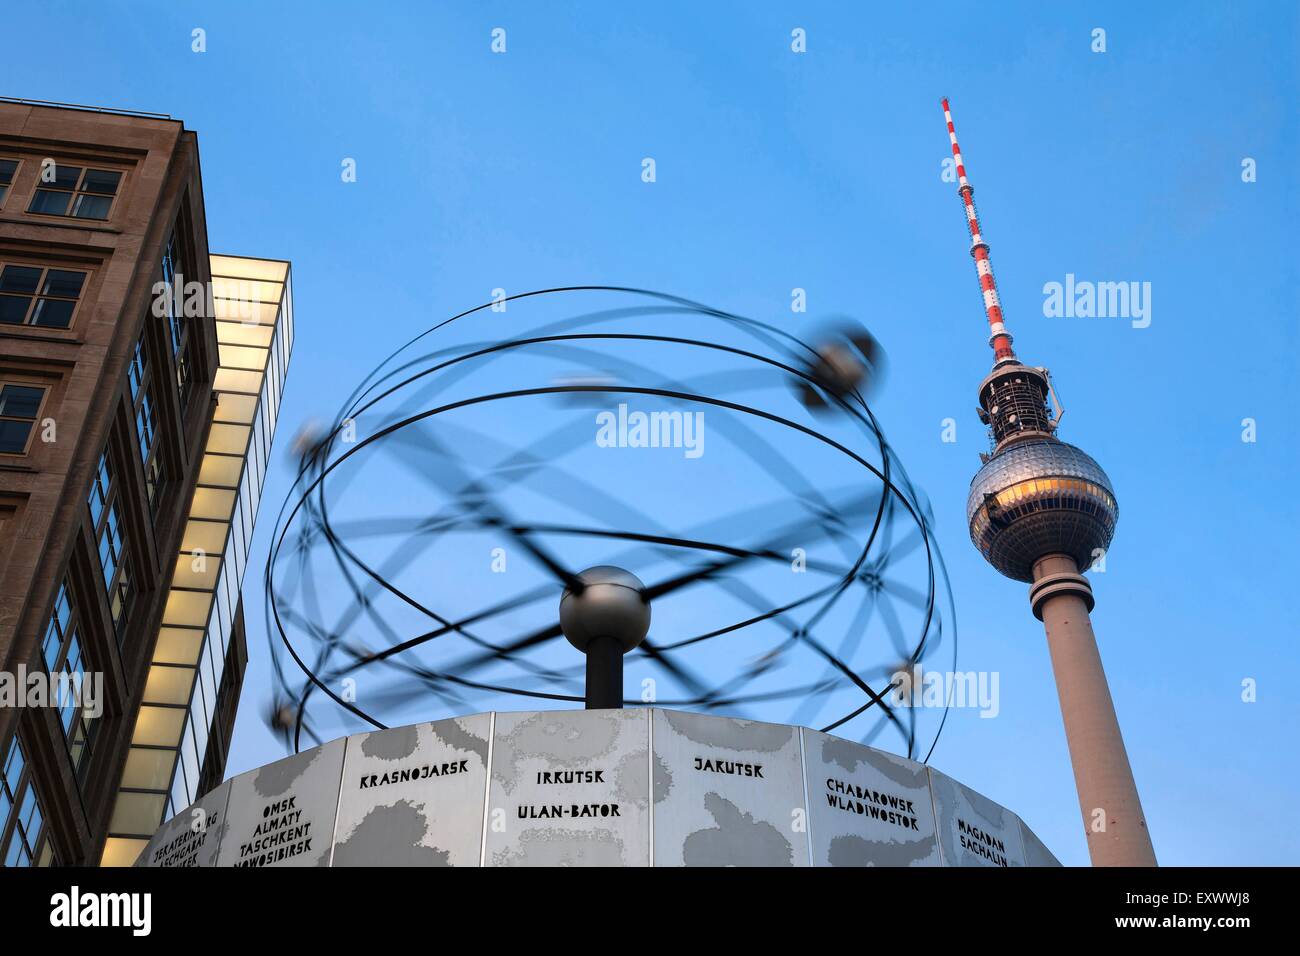 Tour de transmission de radio Alex et Urania-Weltzeituhr, Alexanderplatz, Berlin, Germany, Europe Banque D'Images